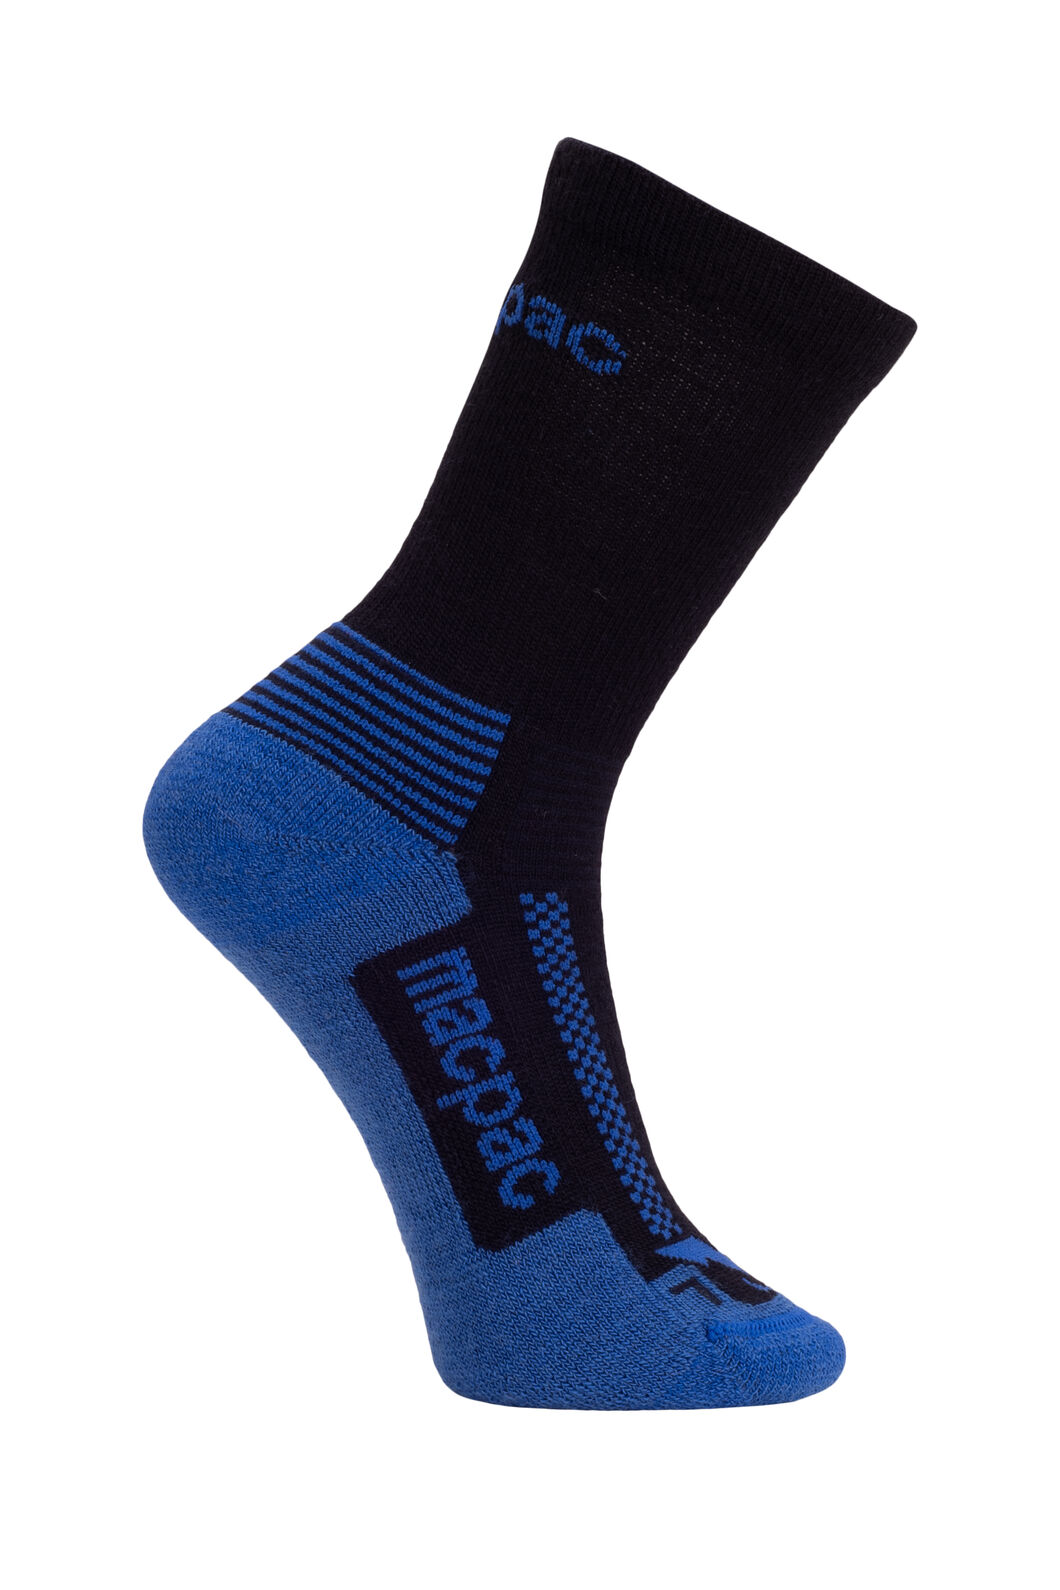 Macpac Kids' Hiking Sock, Navy/Classic Blue, hi-res